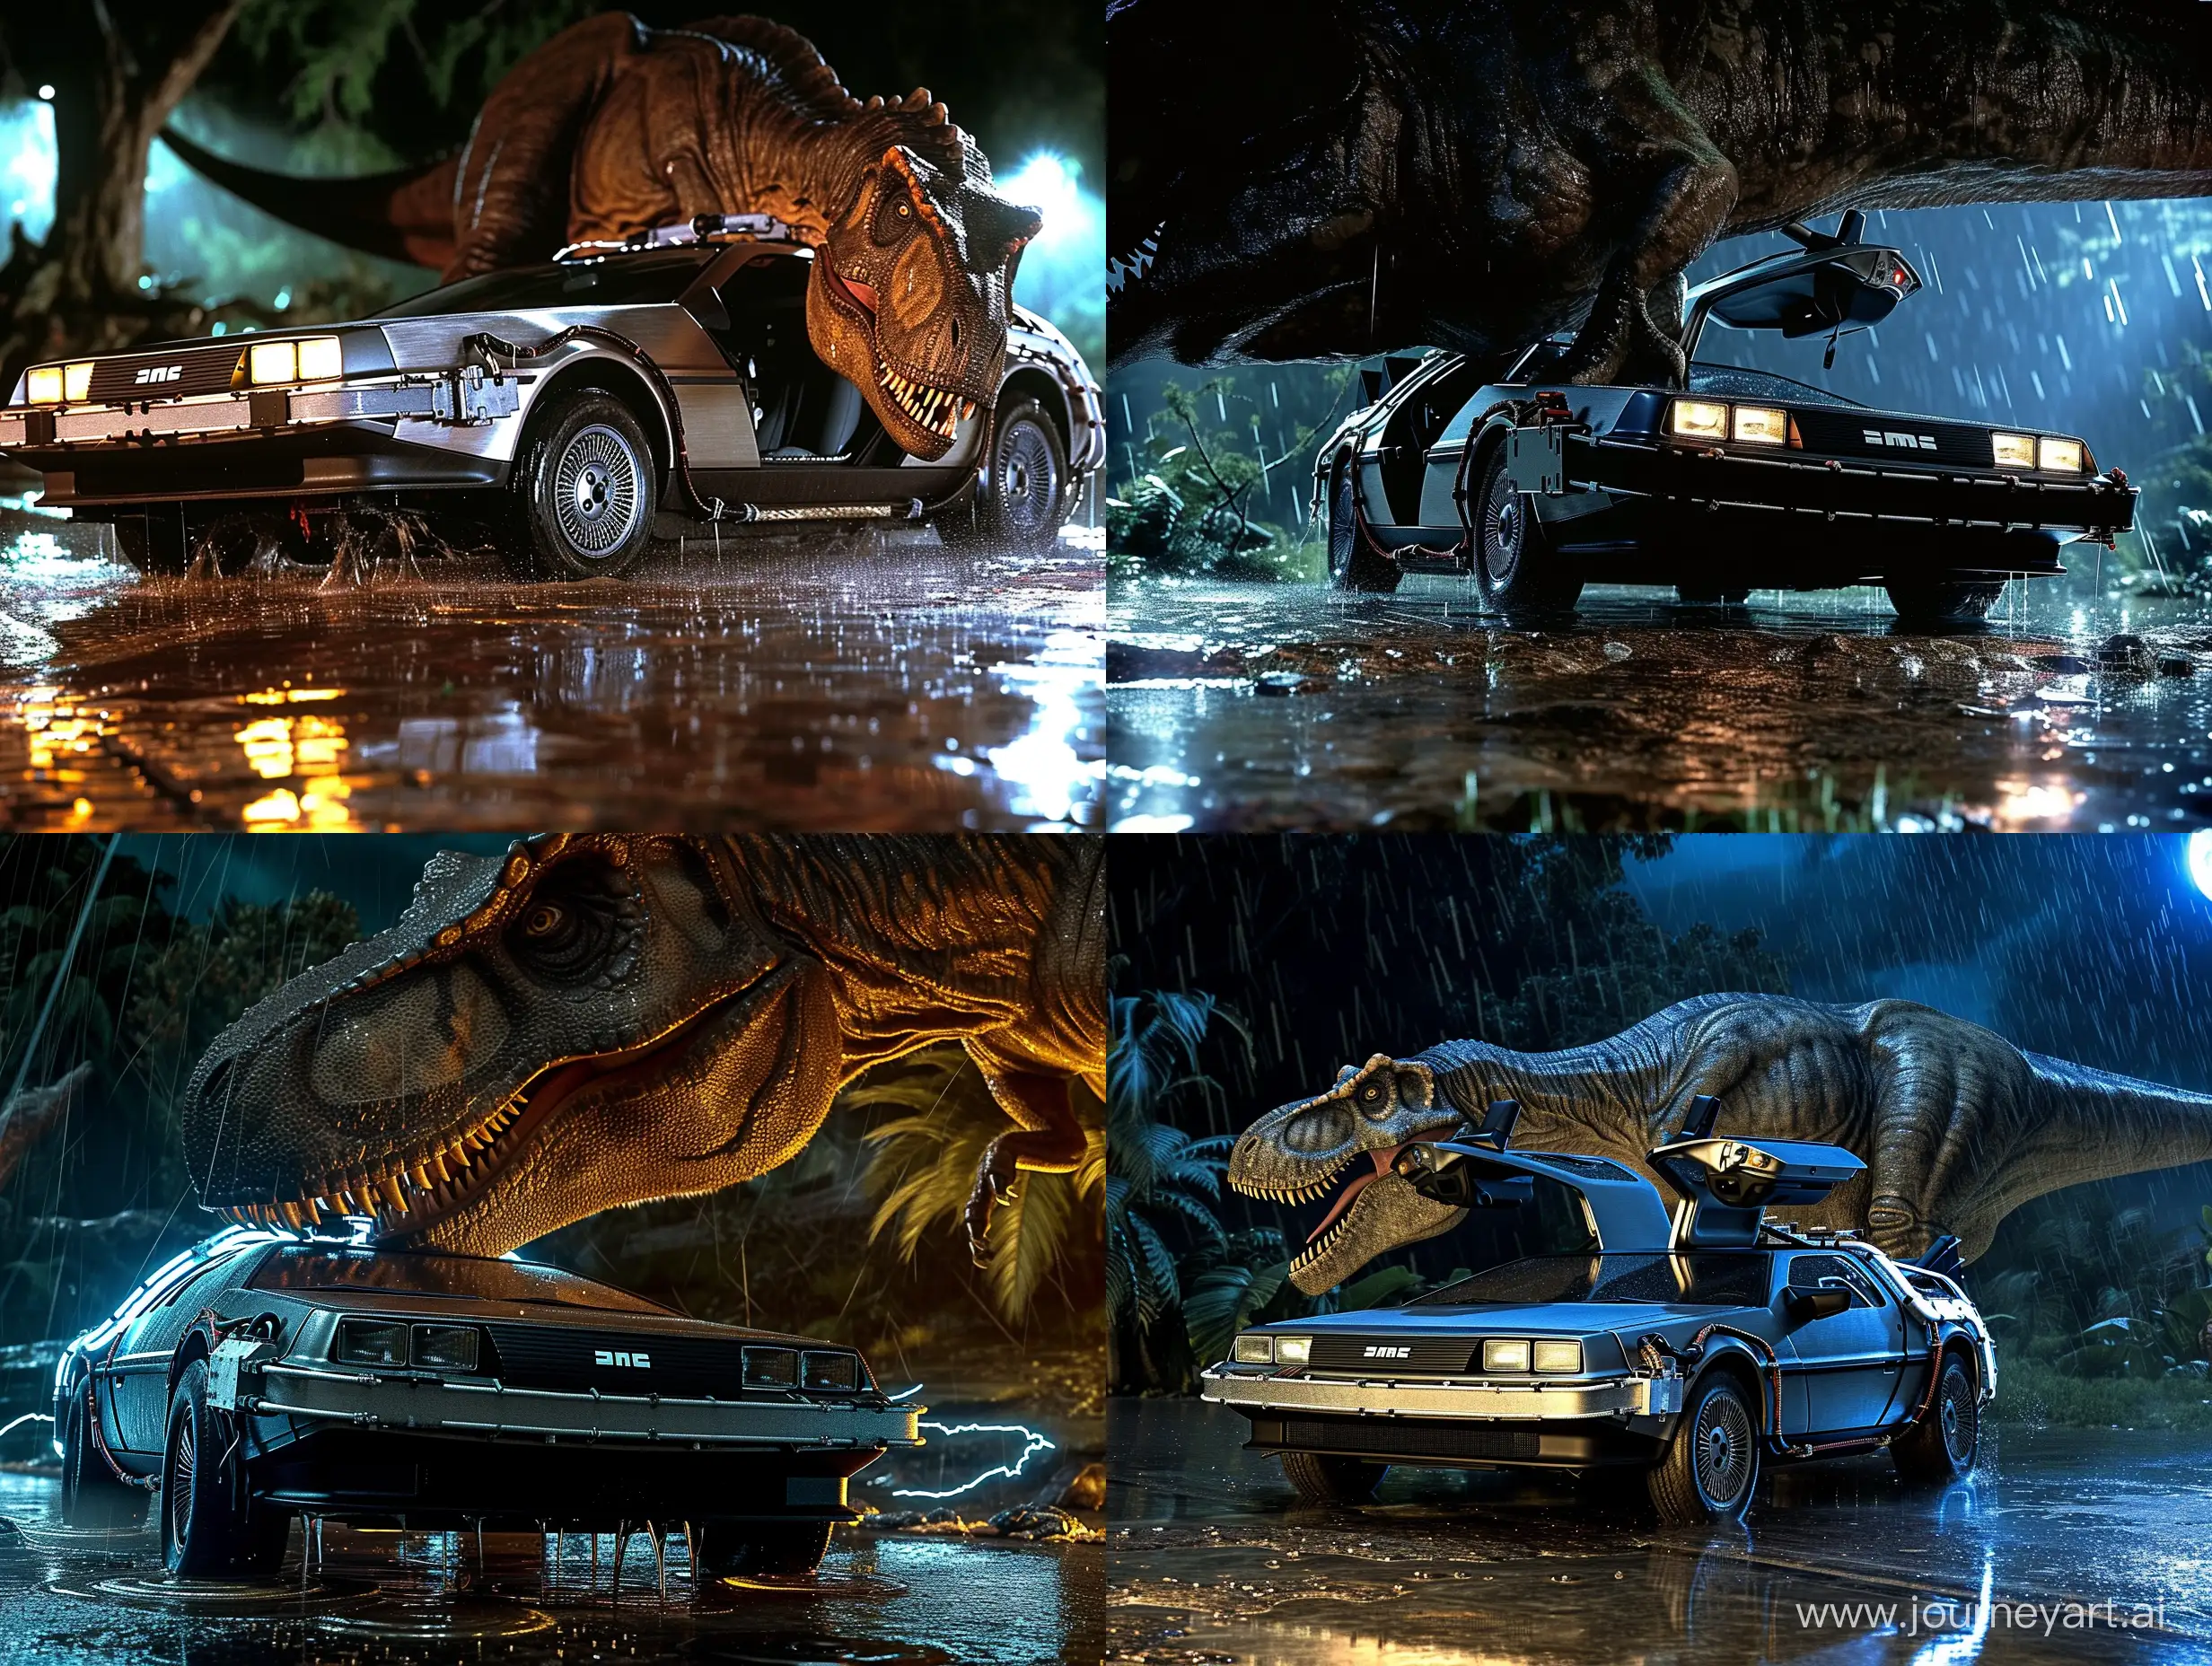 A DeLorean time machine underneath a T-Rex from jurassic park, night, rain, wet dinosaur, wet car, photorealistic, movie scene